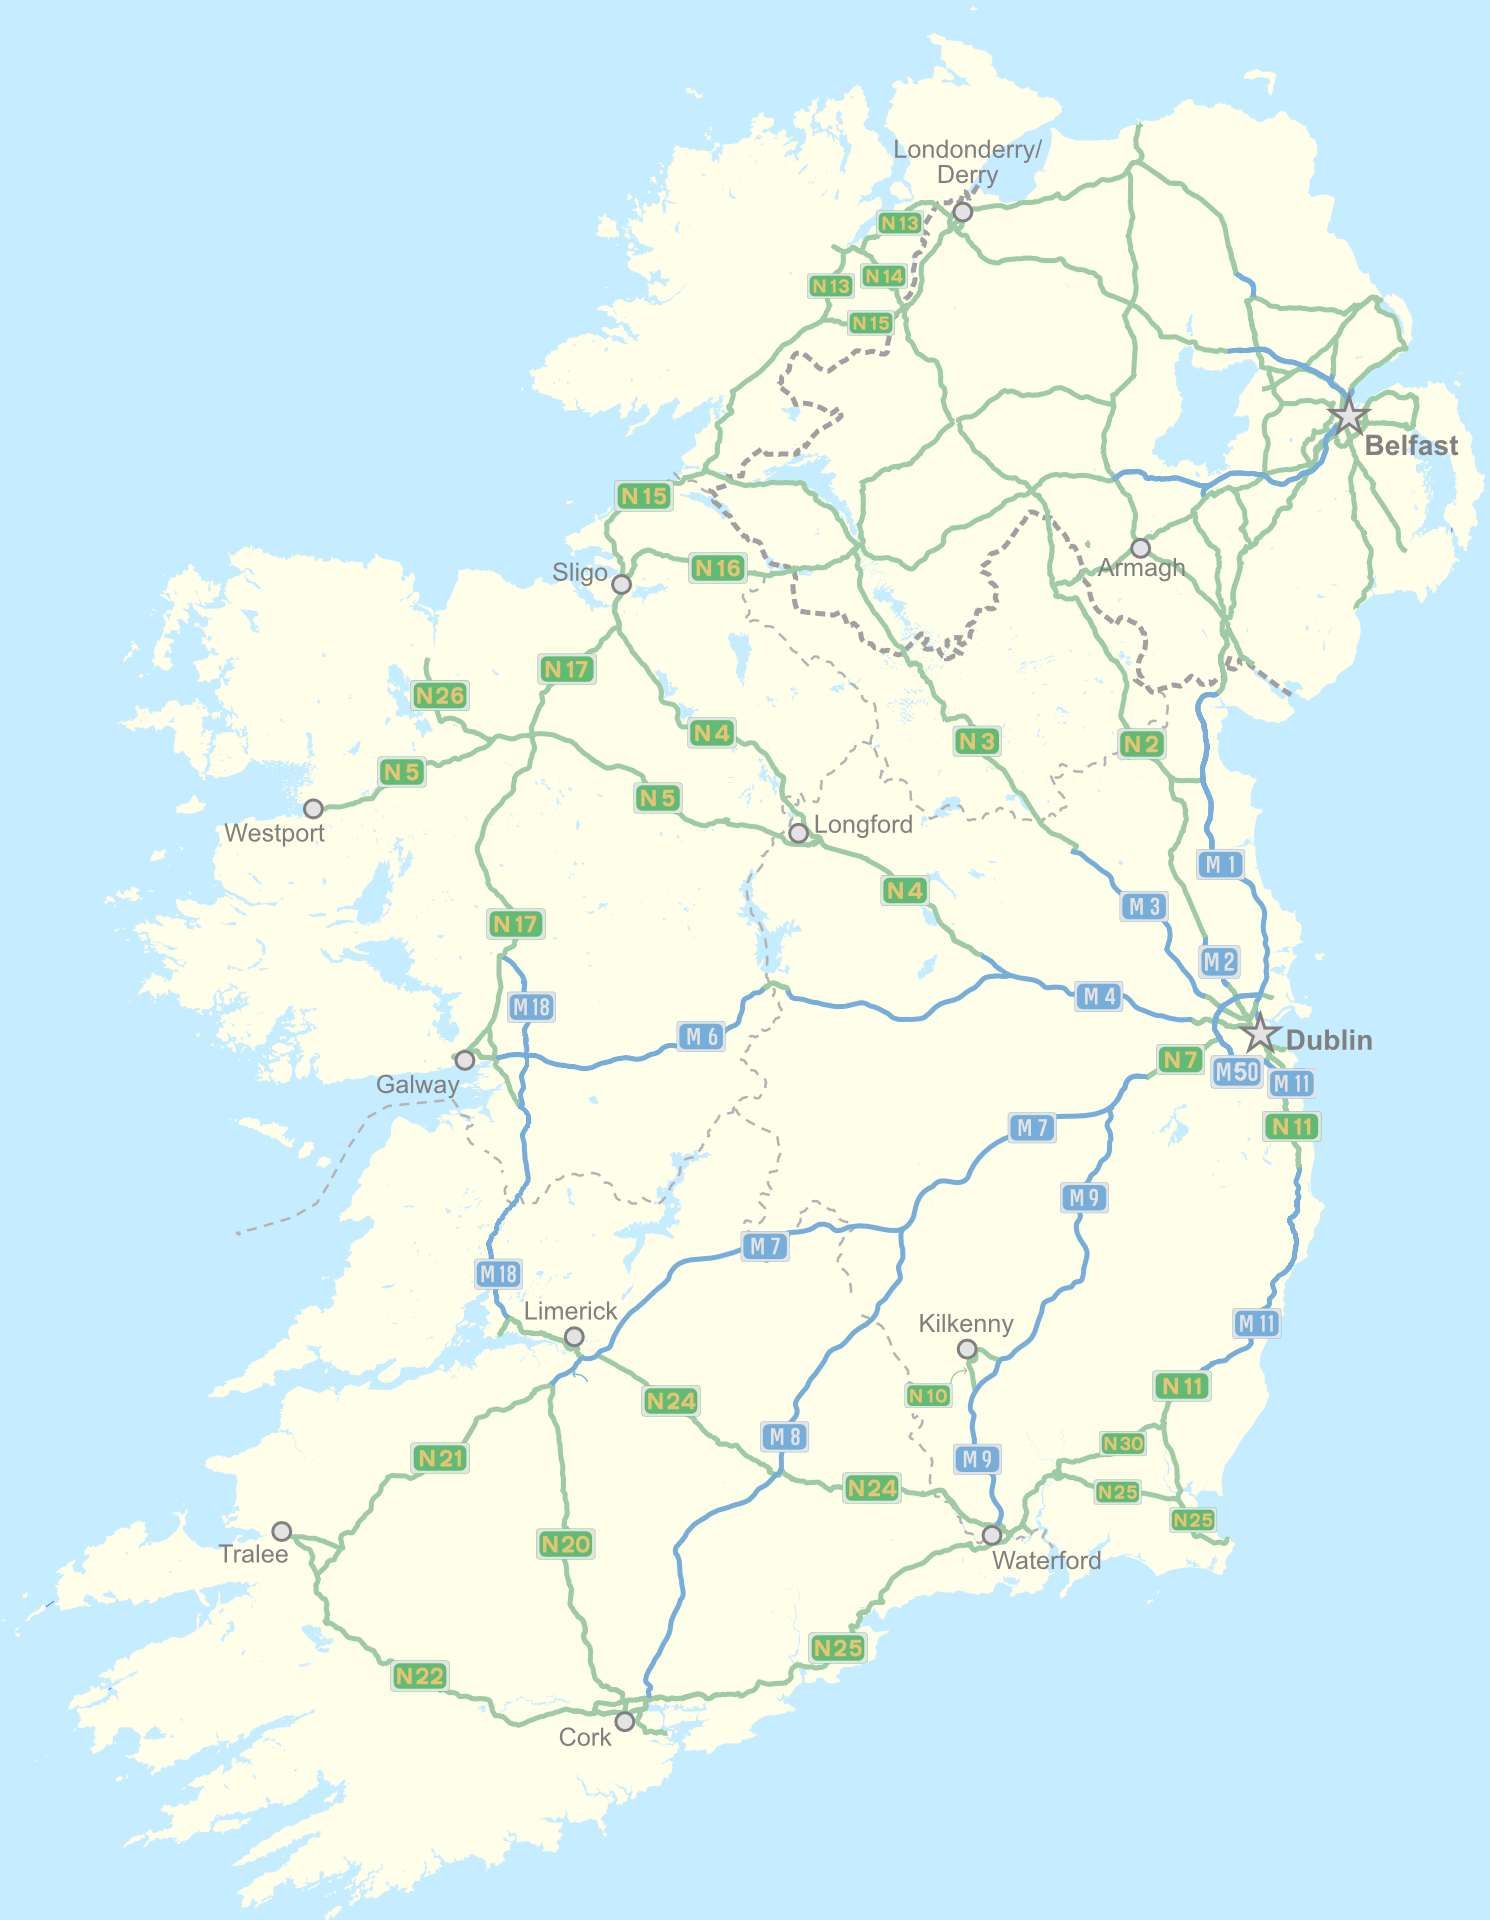 Free Dublin, Ireland Speed Dating Events | Eventbrite